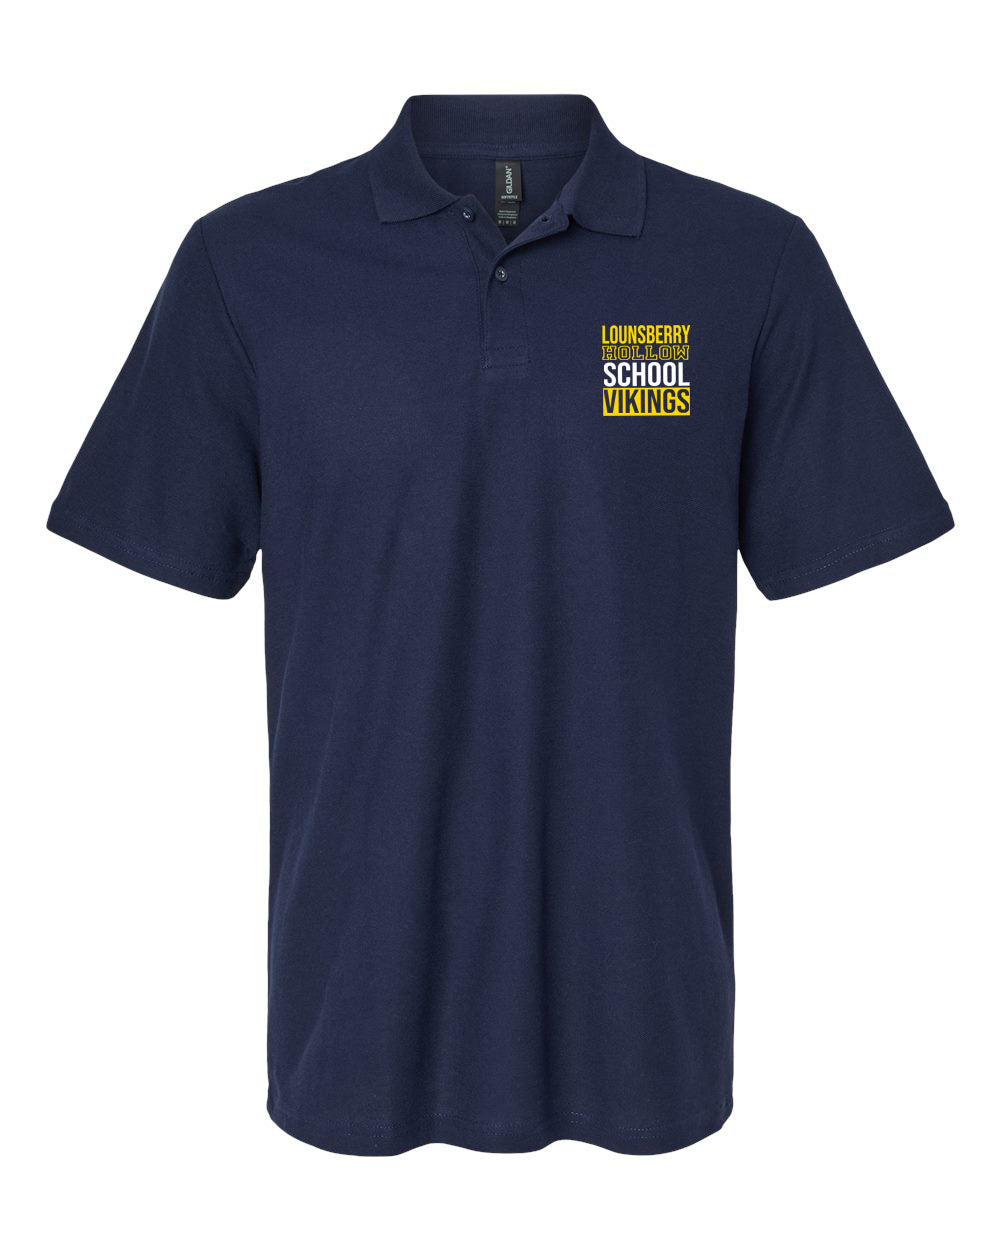 Lounsberry Hollow Design 1 Polo T-Shirt